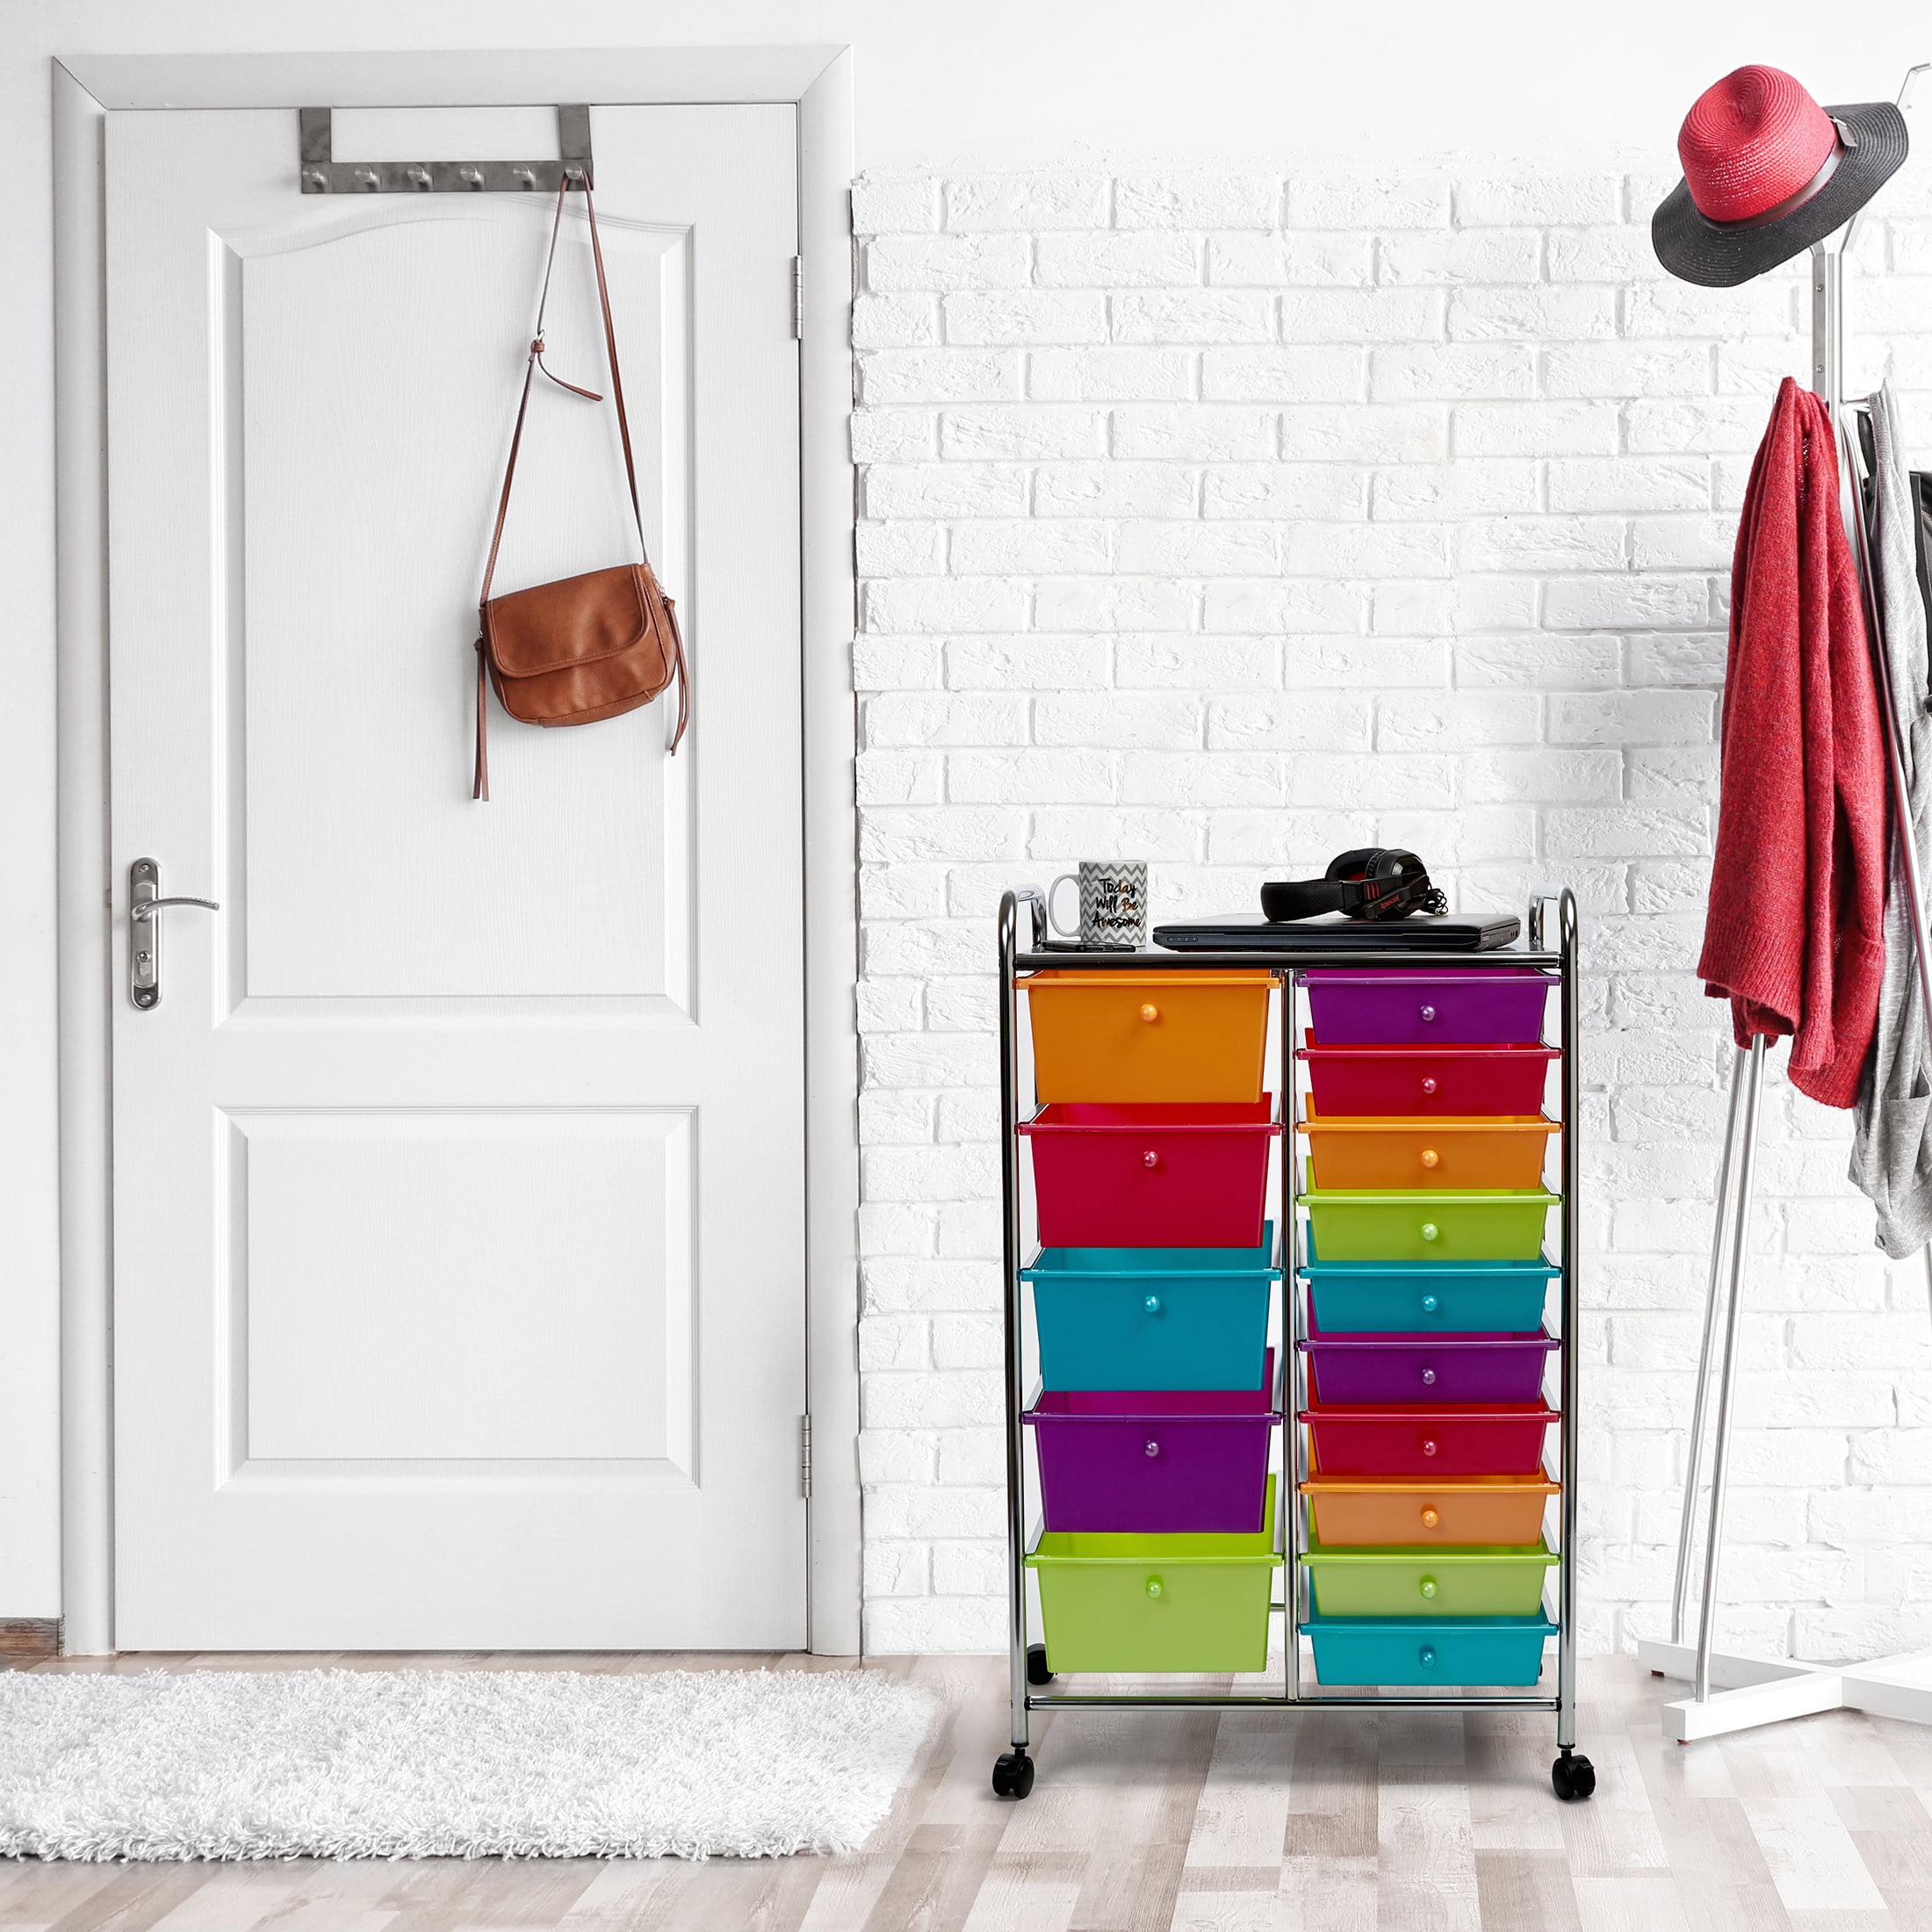 15-Drawer Multicolored Storage Cart (W36431)